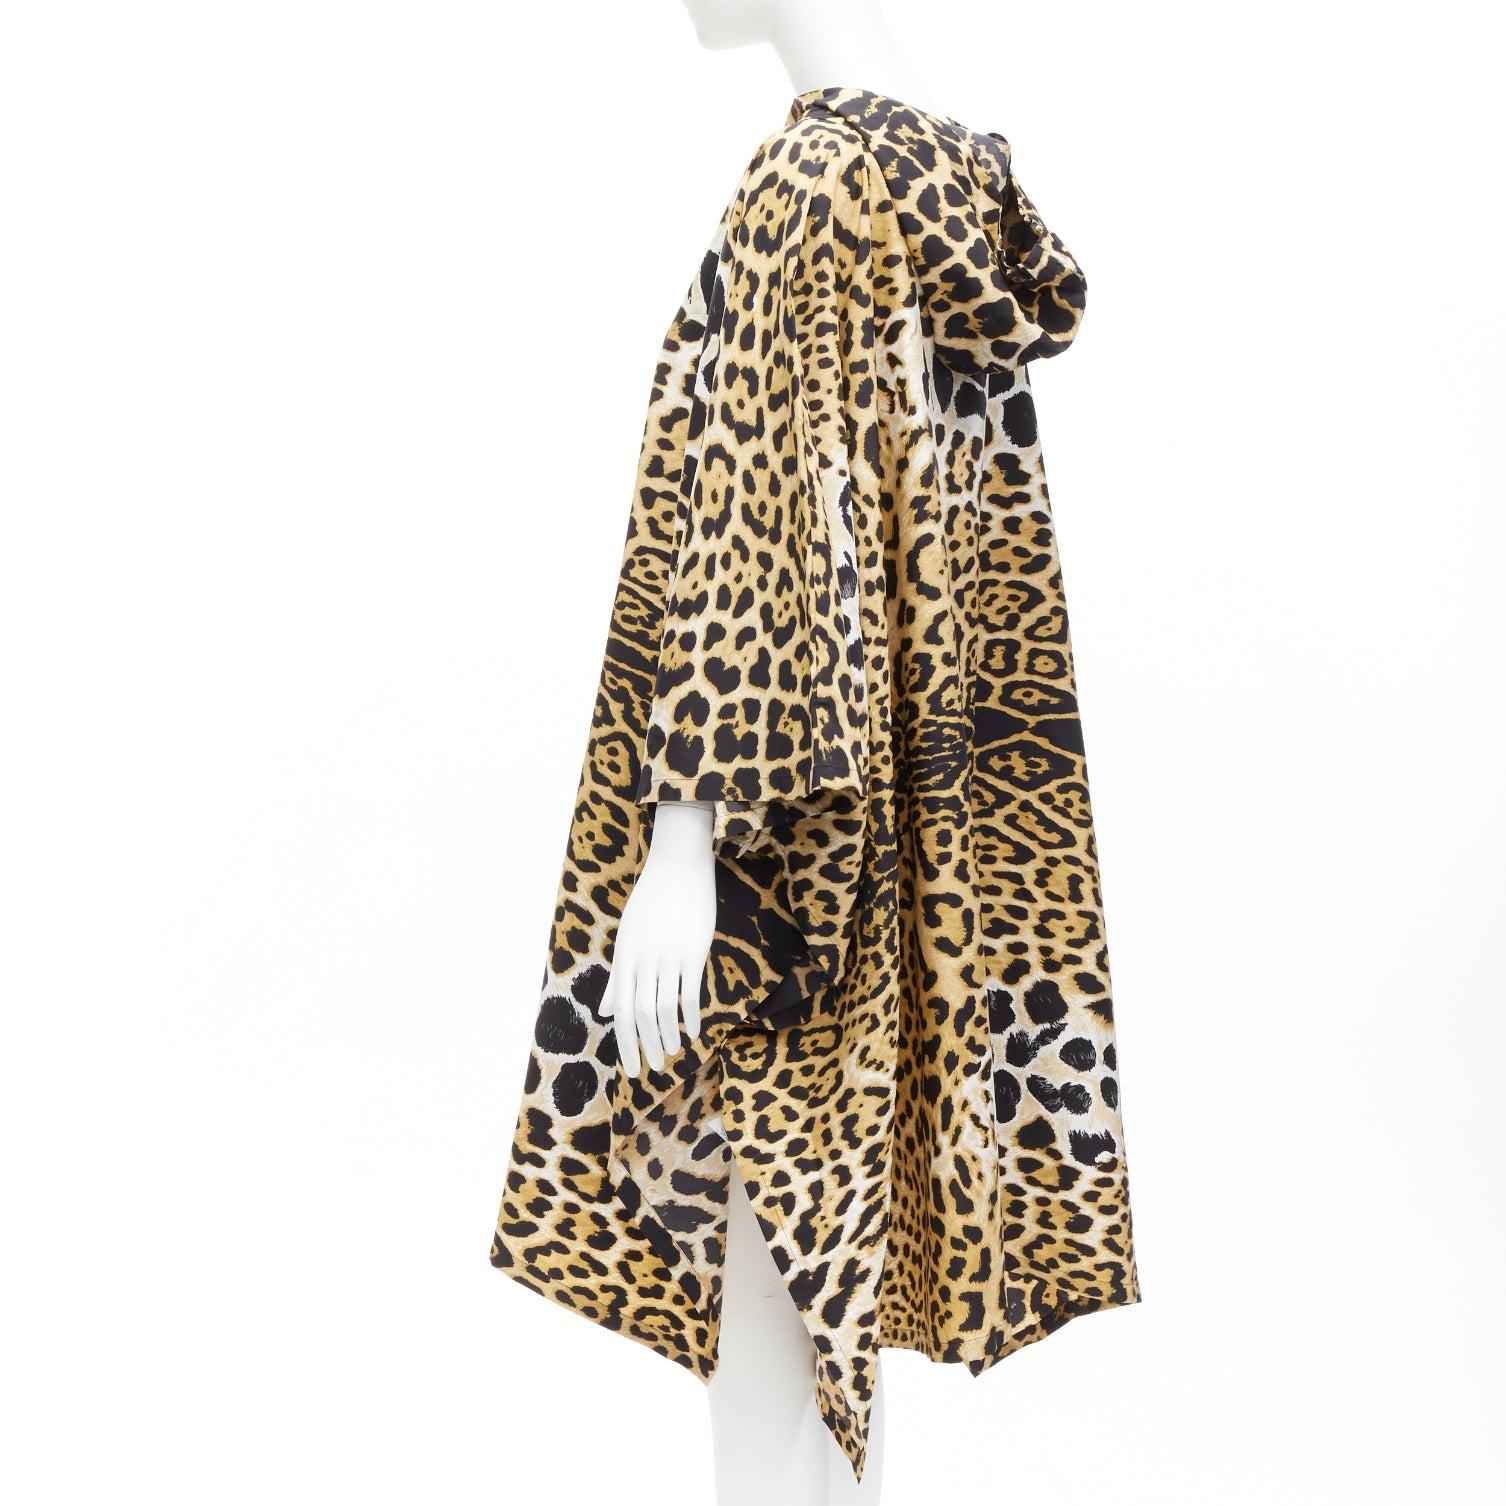 YVES SAINT LAURENT Stefano Pilati 2011 Vintage leopard spot hooded poncho FR36 S 2